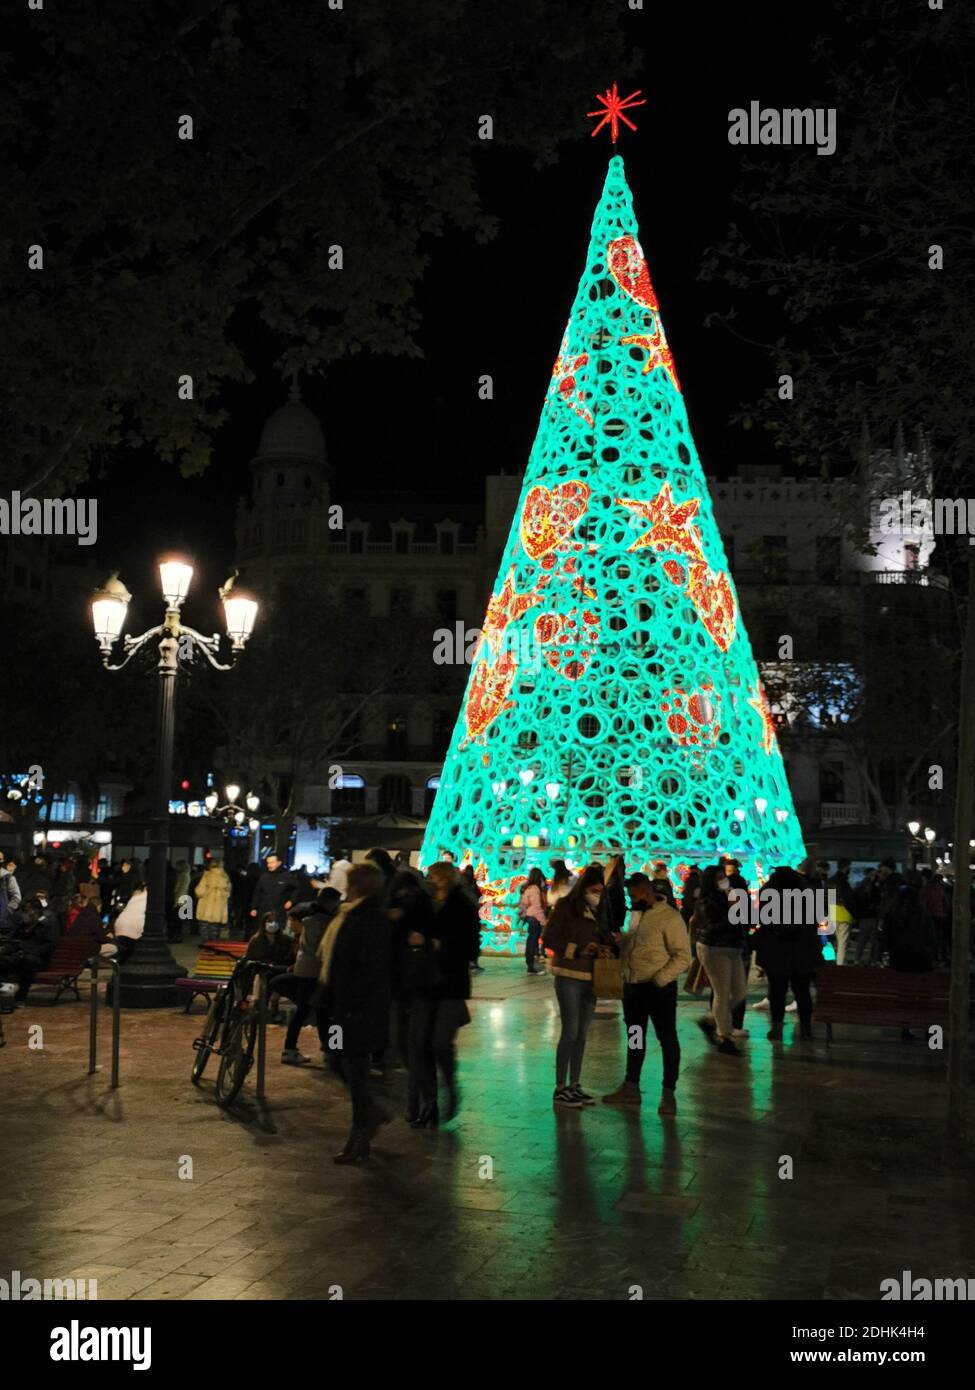 VALENCIA, SPAIN - Dec 05, 2020: VALENCIA- DECEMBER 5, 2020: Christmas tree located in the town hall square of Valencia, Spain Stock Photo